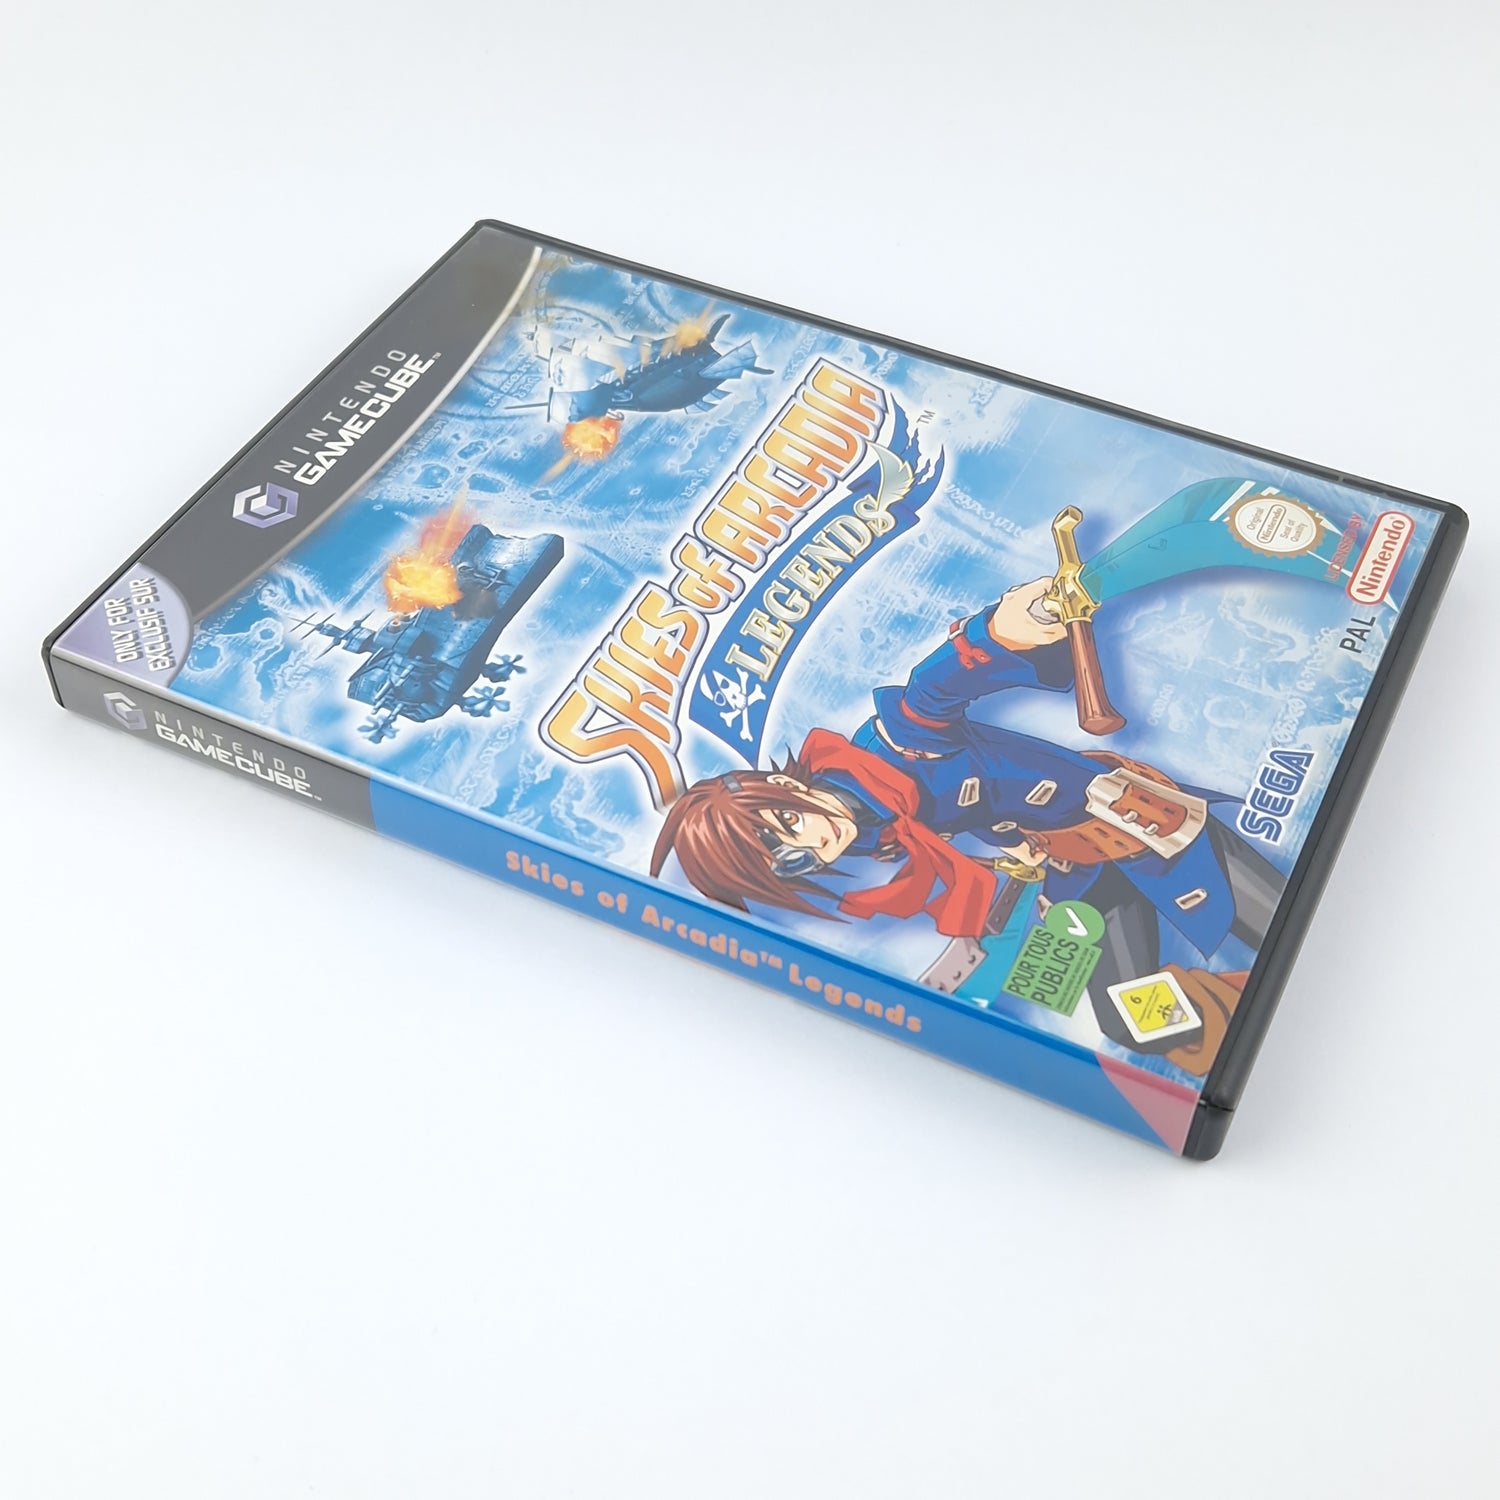 Nintendo Gamecube game: Skies of Arcadia Legends - CD instructions OVP cib / PAL